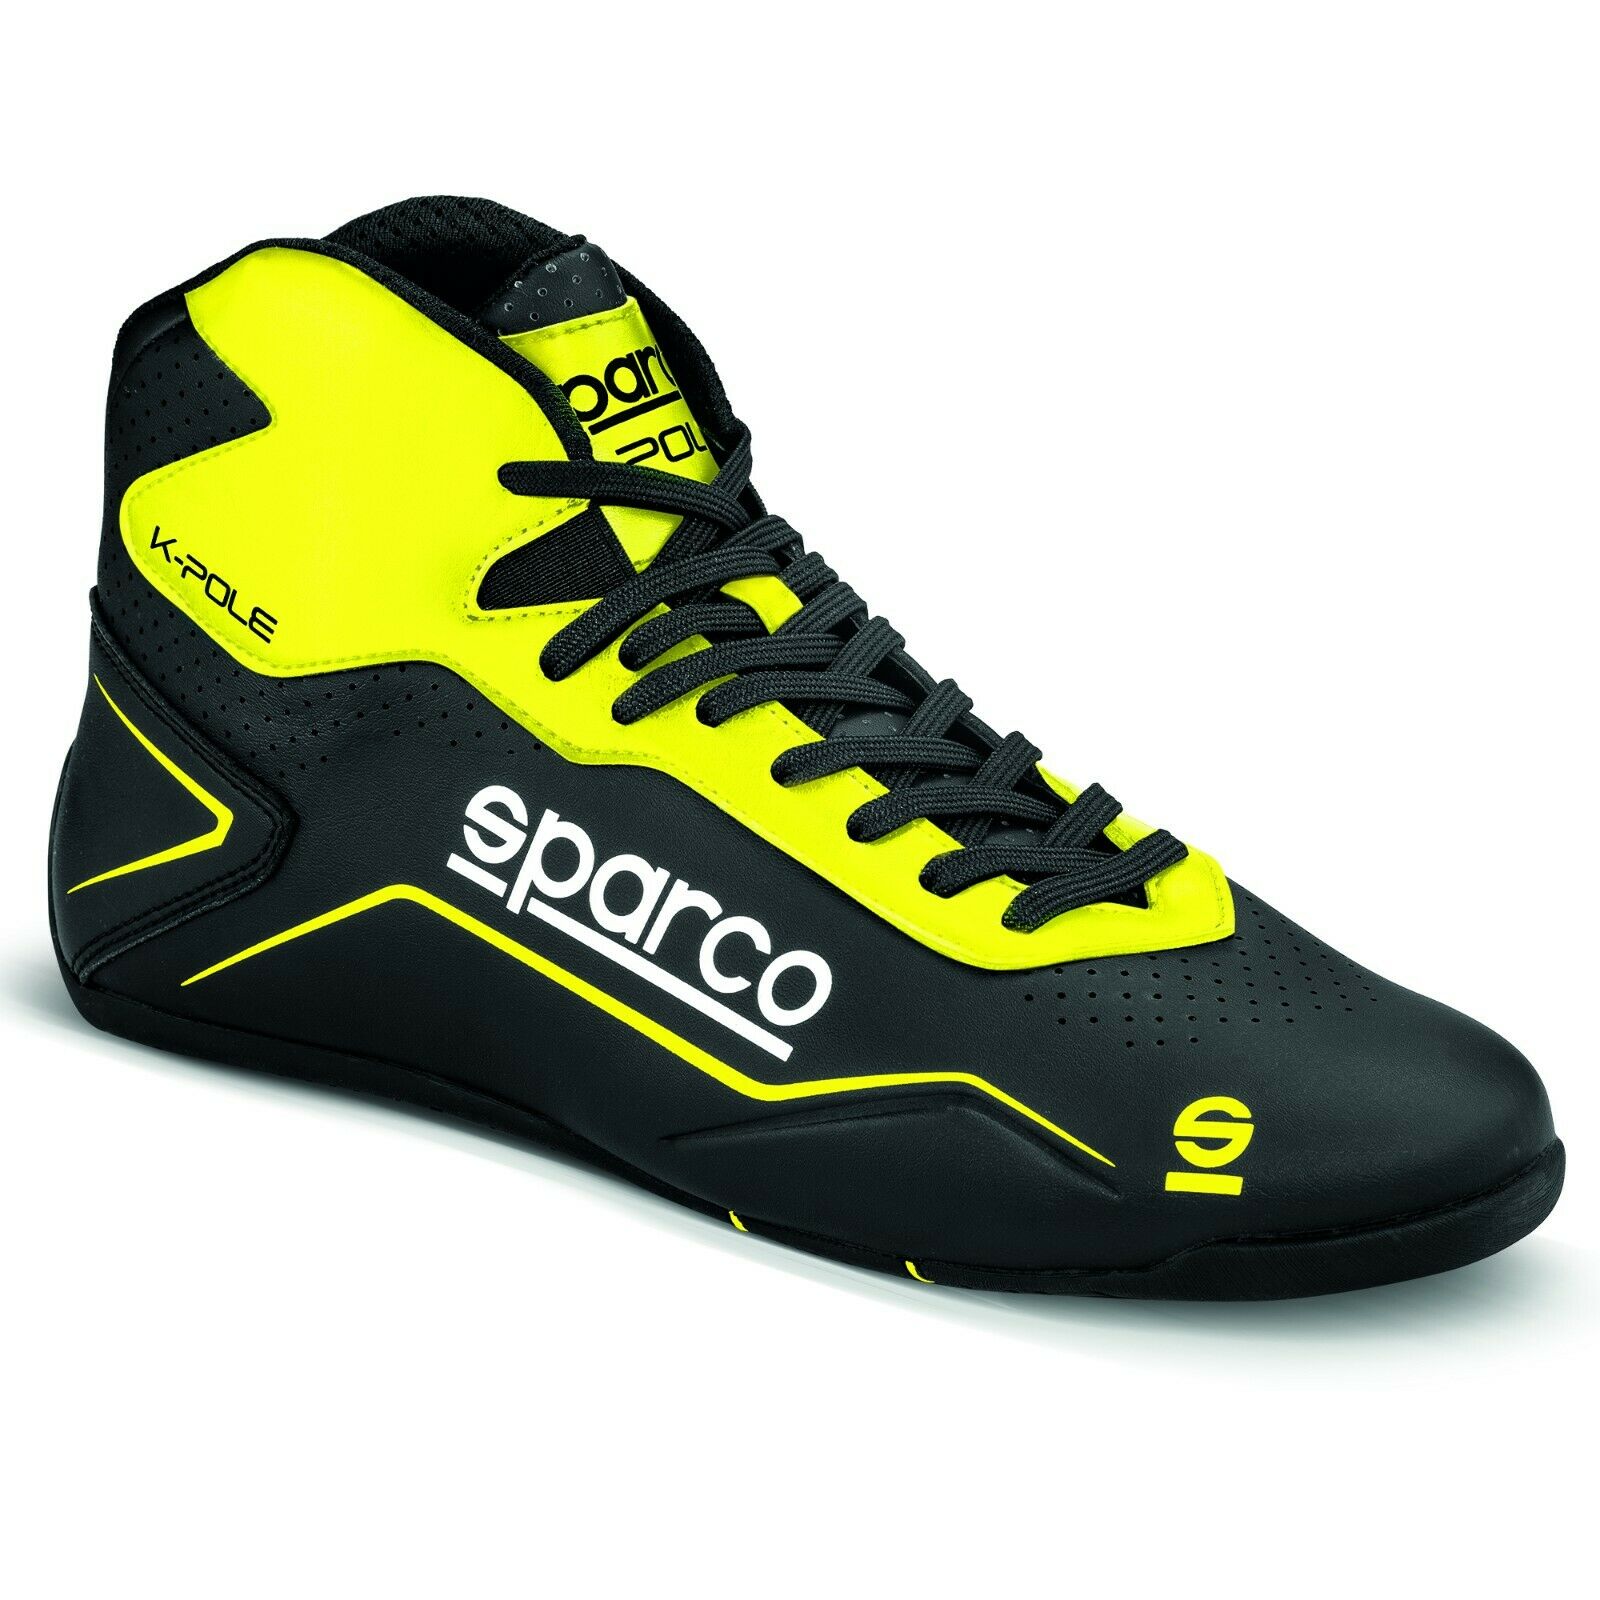 Sparco Karting Shoes K-pole Black/yellow Size Eur 36